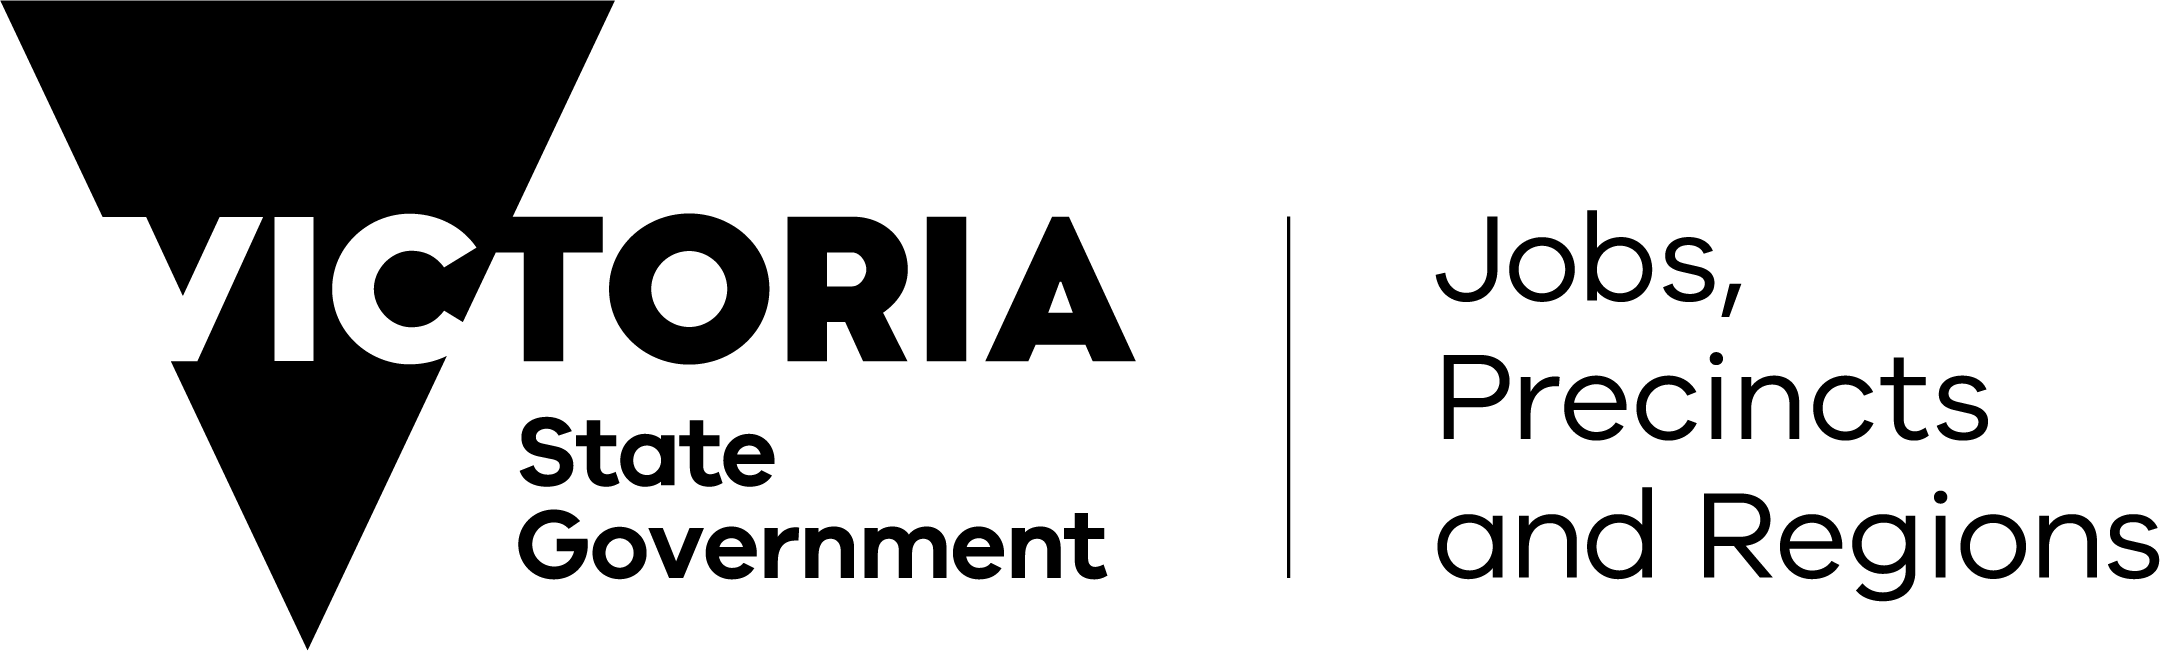 Department of Jobs, Precincts and Regions Victoria logo